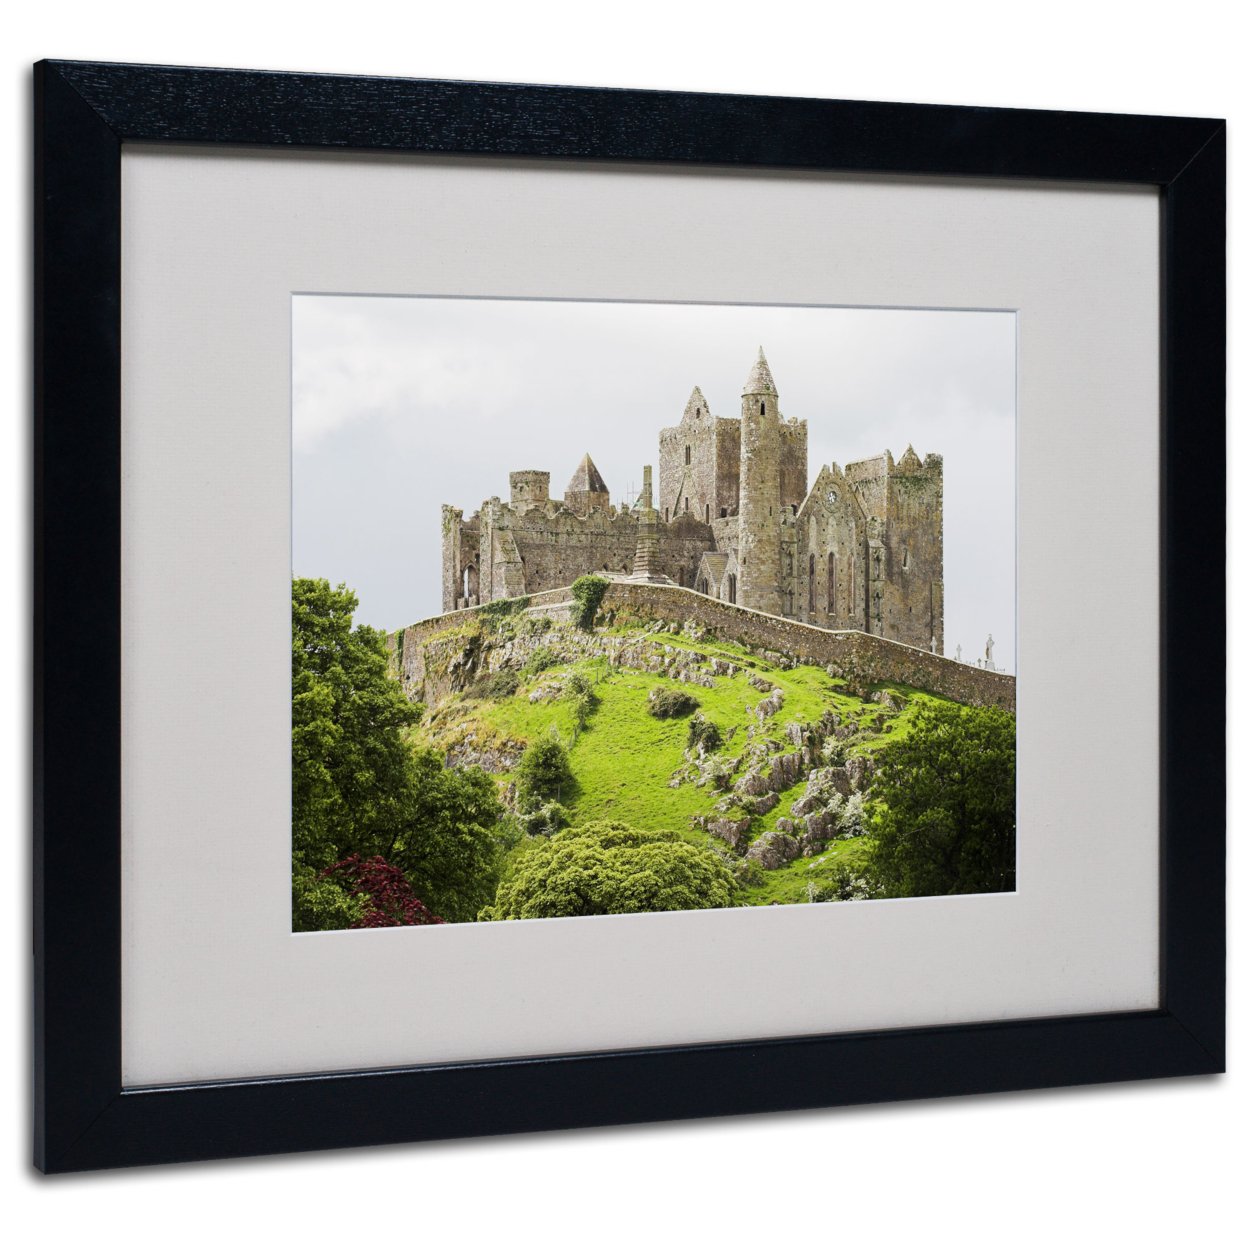 Pierre Leclerc 'Rock Of Cashel Ireland' Black Wooden Framed Art 18 X 22 Inches